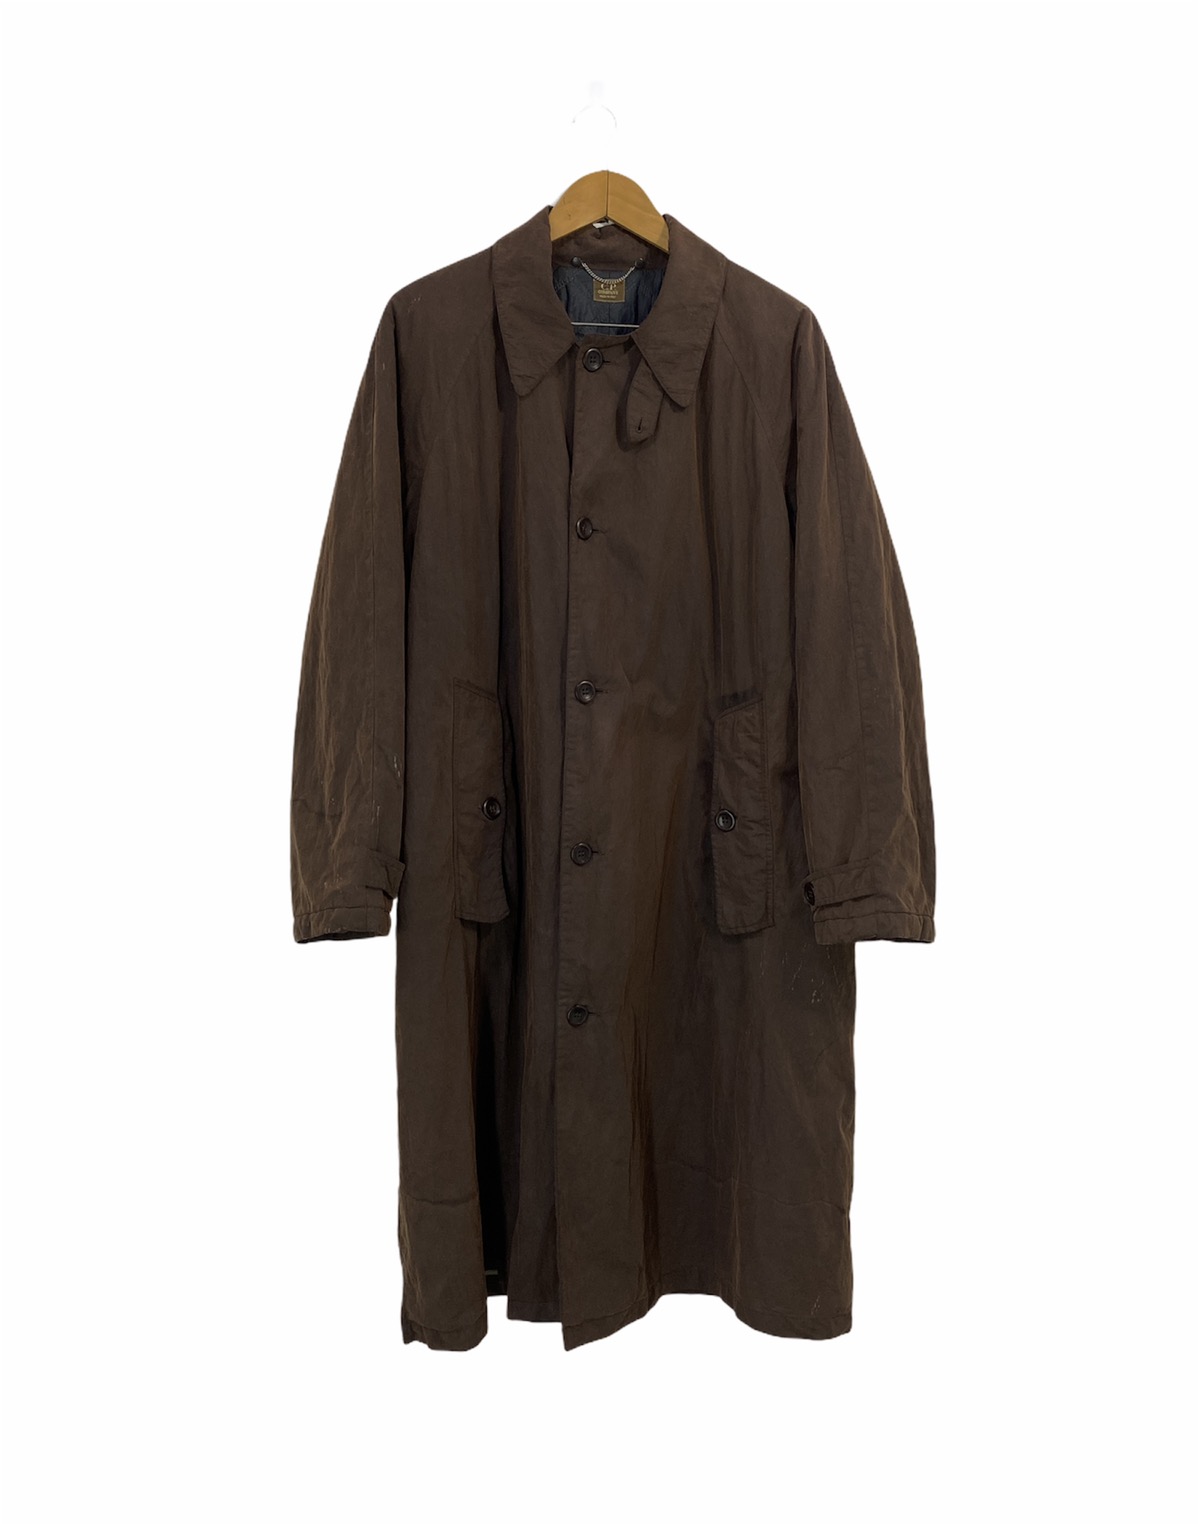 C.P Company Cotton Long Jacket / Long Coat Design - 1